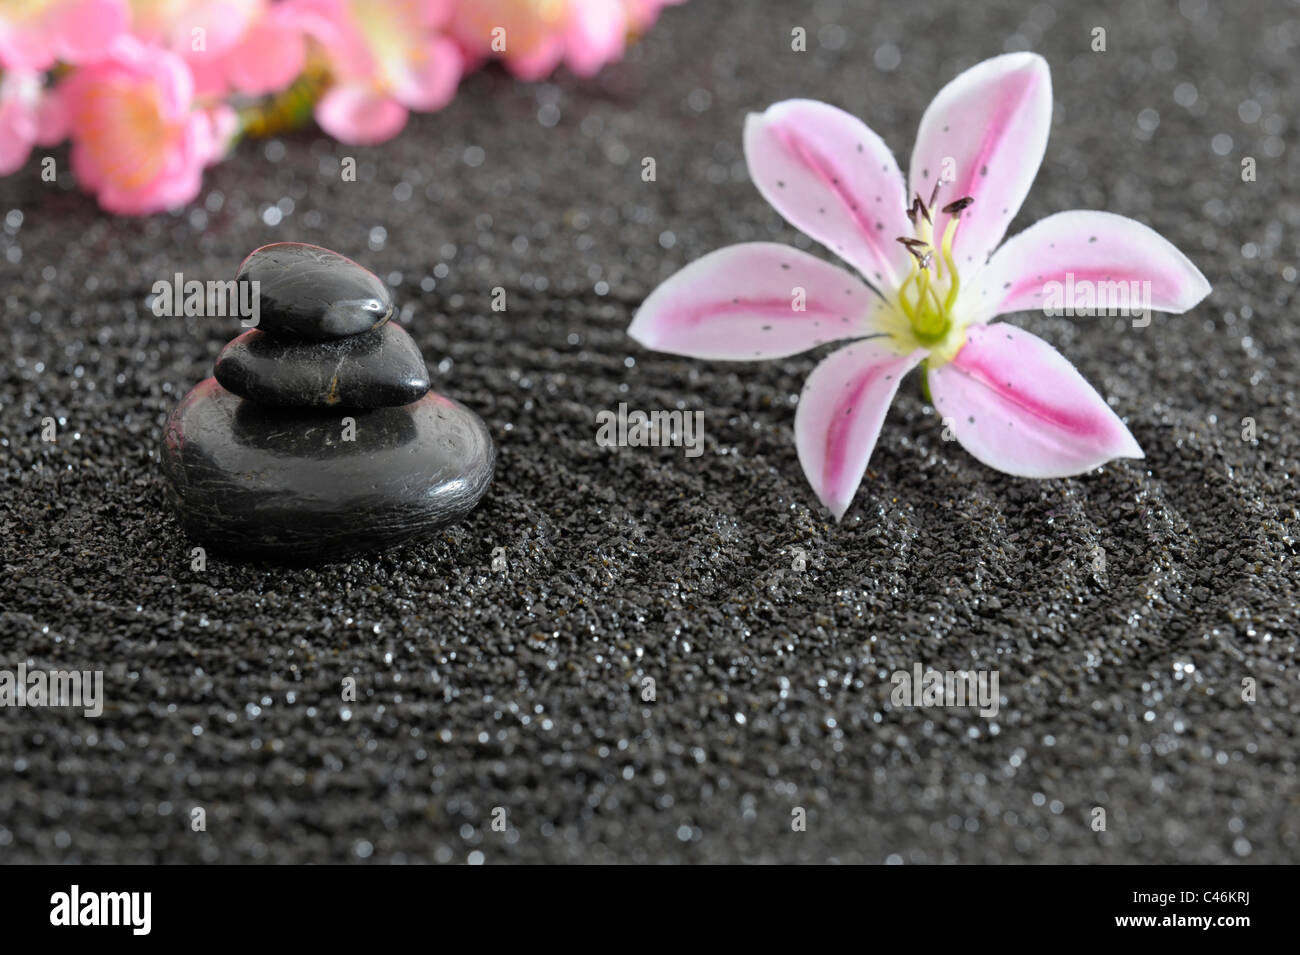 japanese zen garden in sand with stones Stock Photo